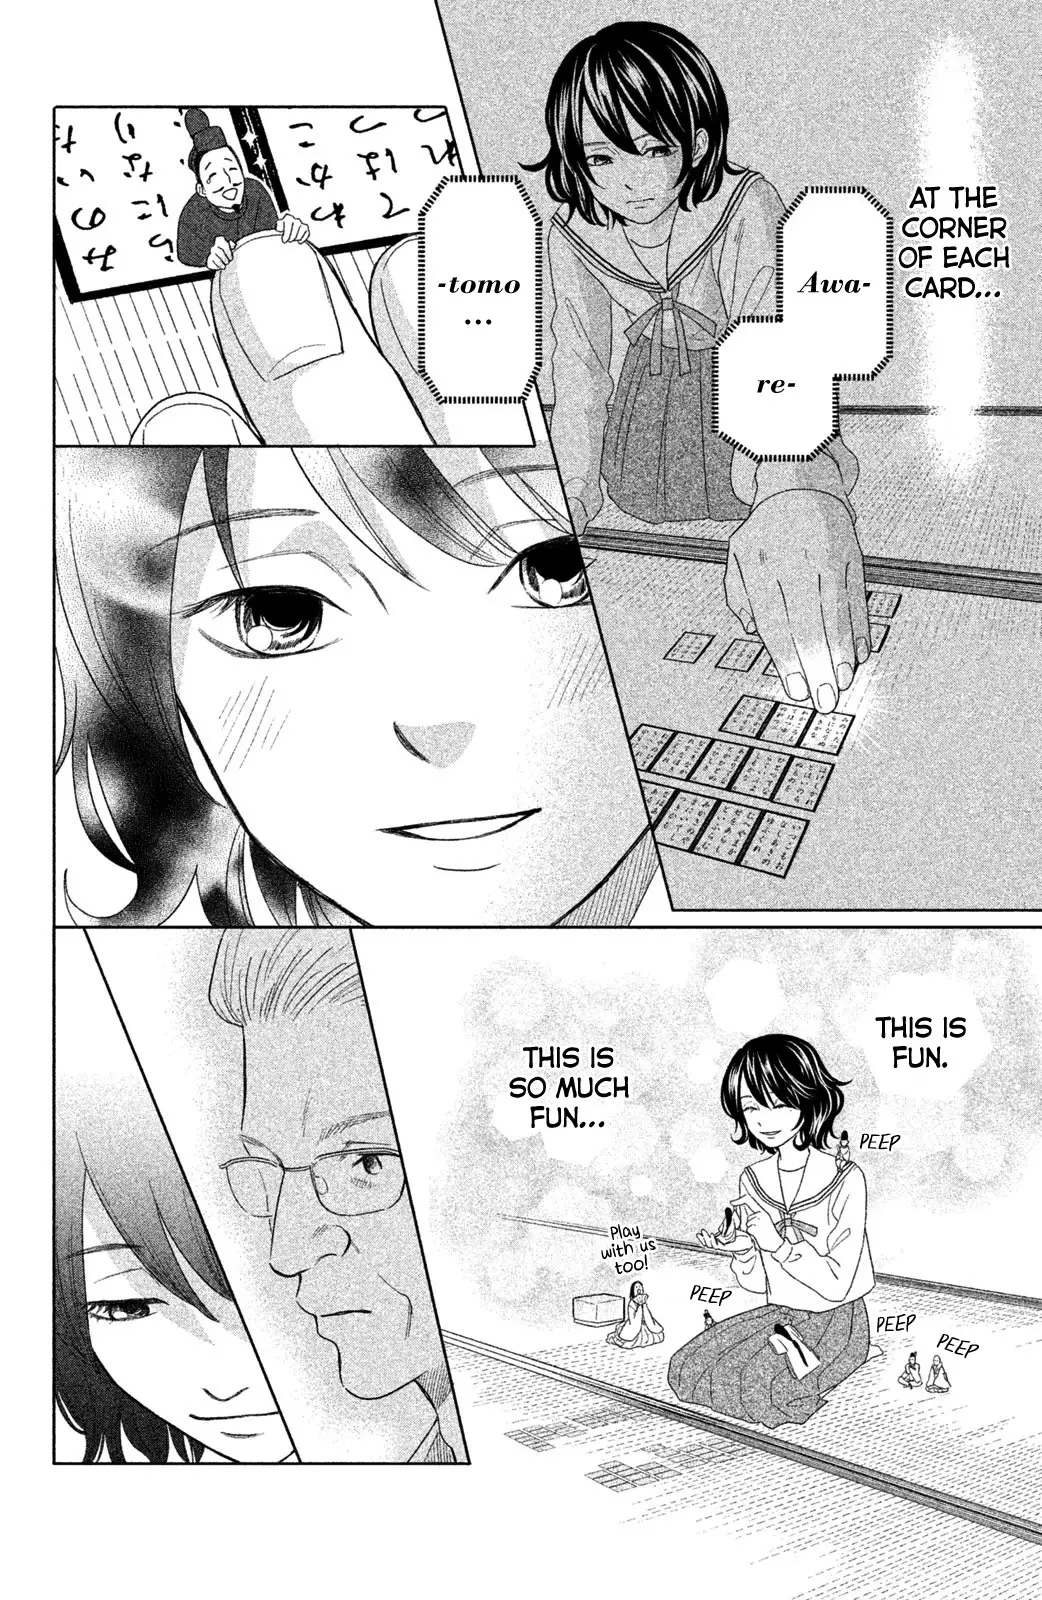 Chihayafuru: Middle School Arc - 11 page 13